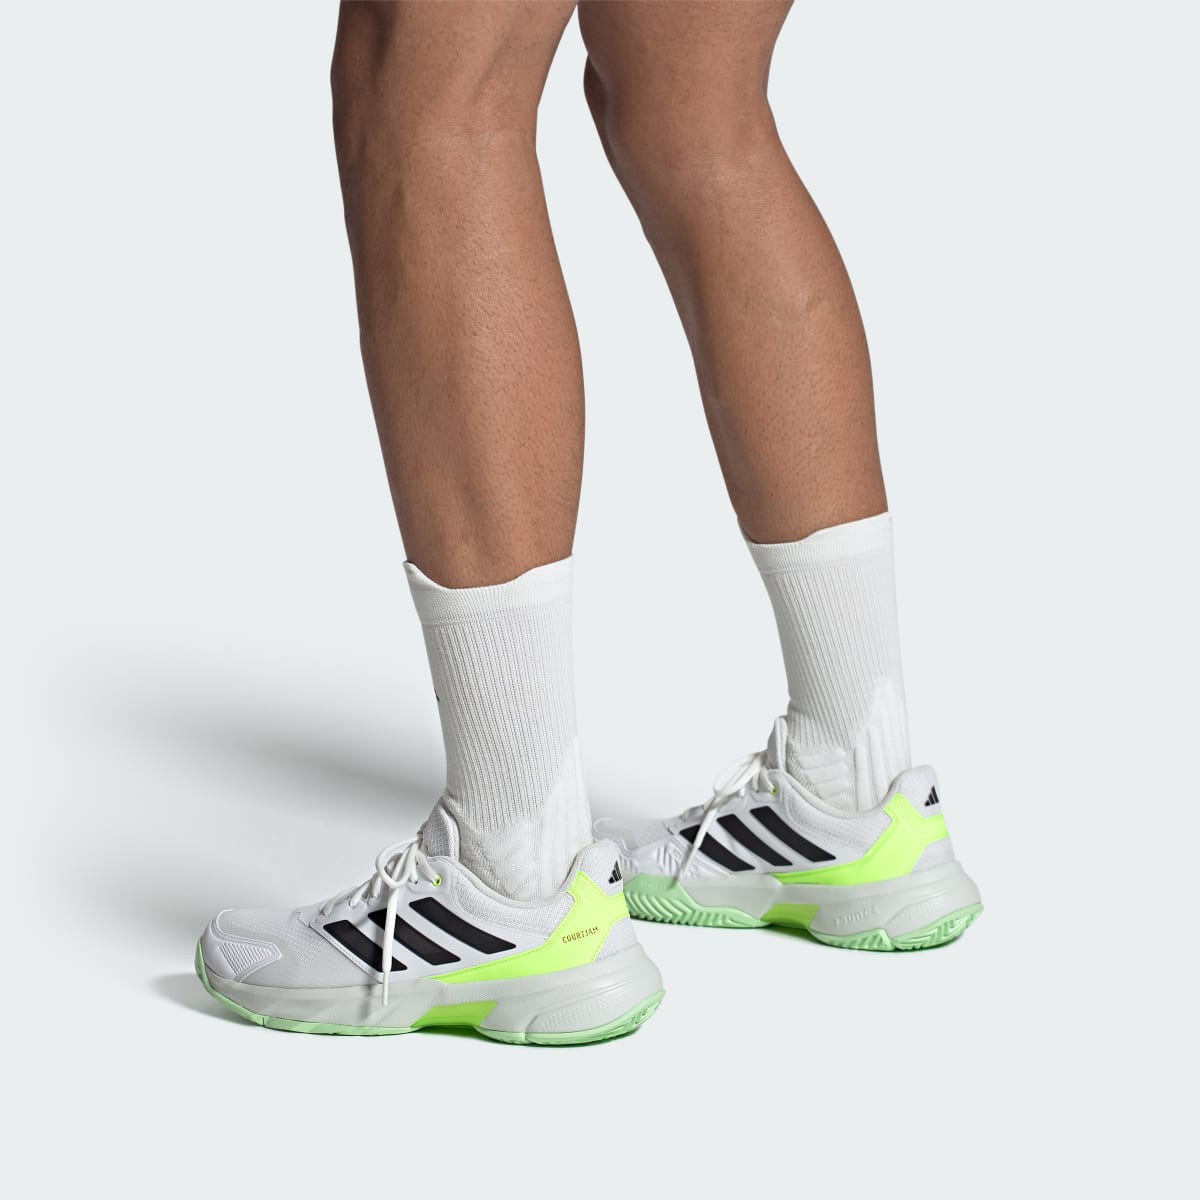 Adidas CourtJam Control 3 Tennis Shoes. 5